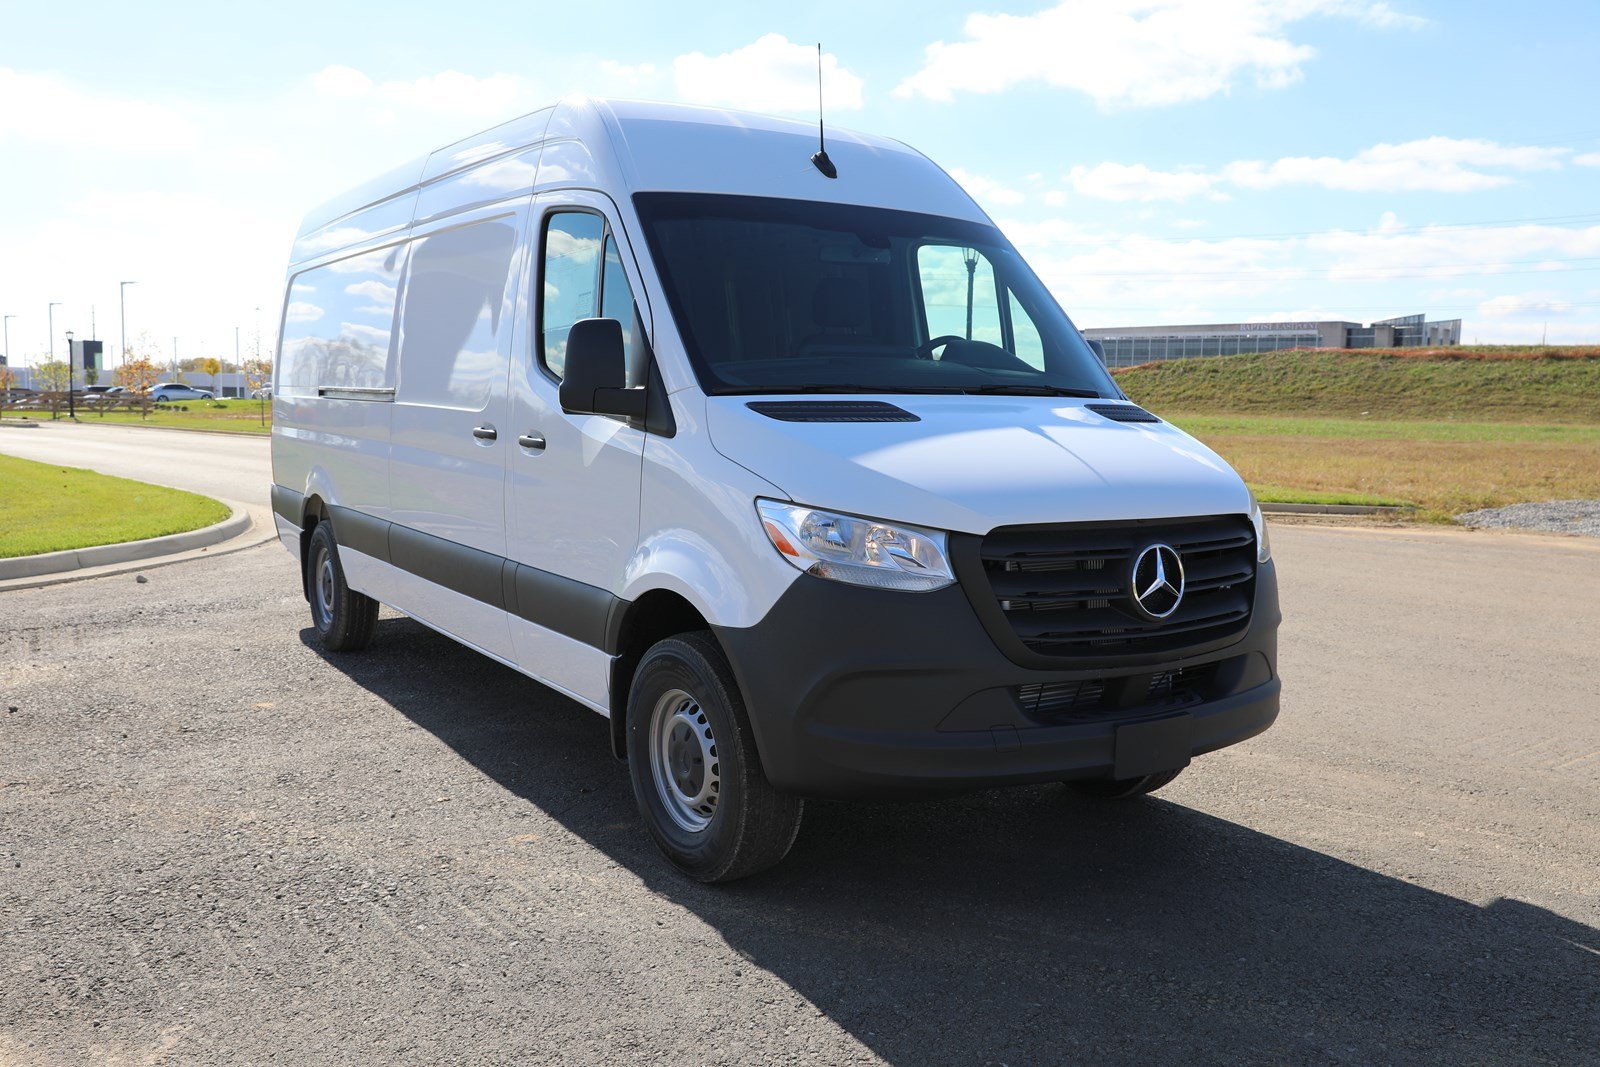 New 2019 Mercedes Benz Sprinter Cargo Van 144 Wb Sr Rwd Full Size Cargo Van